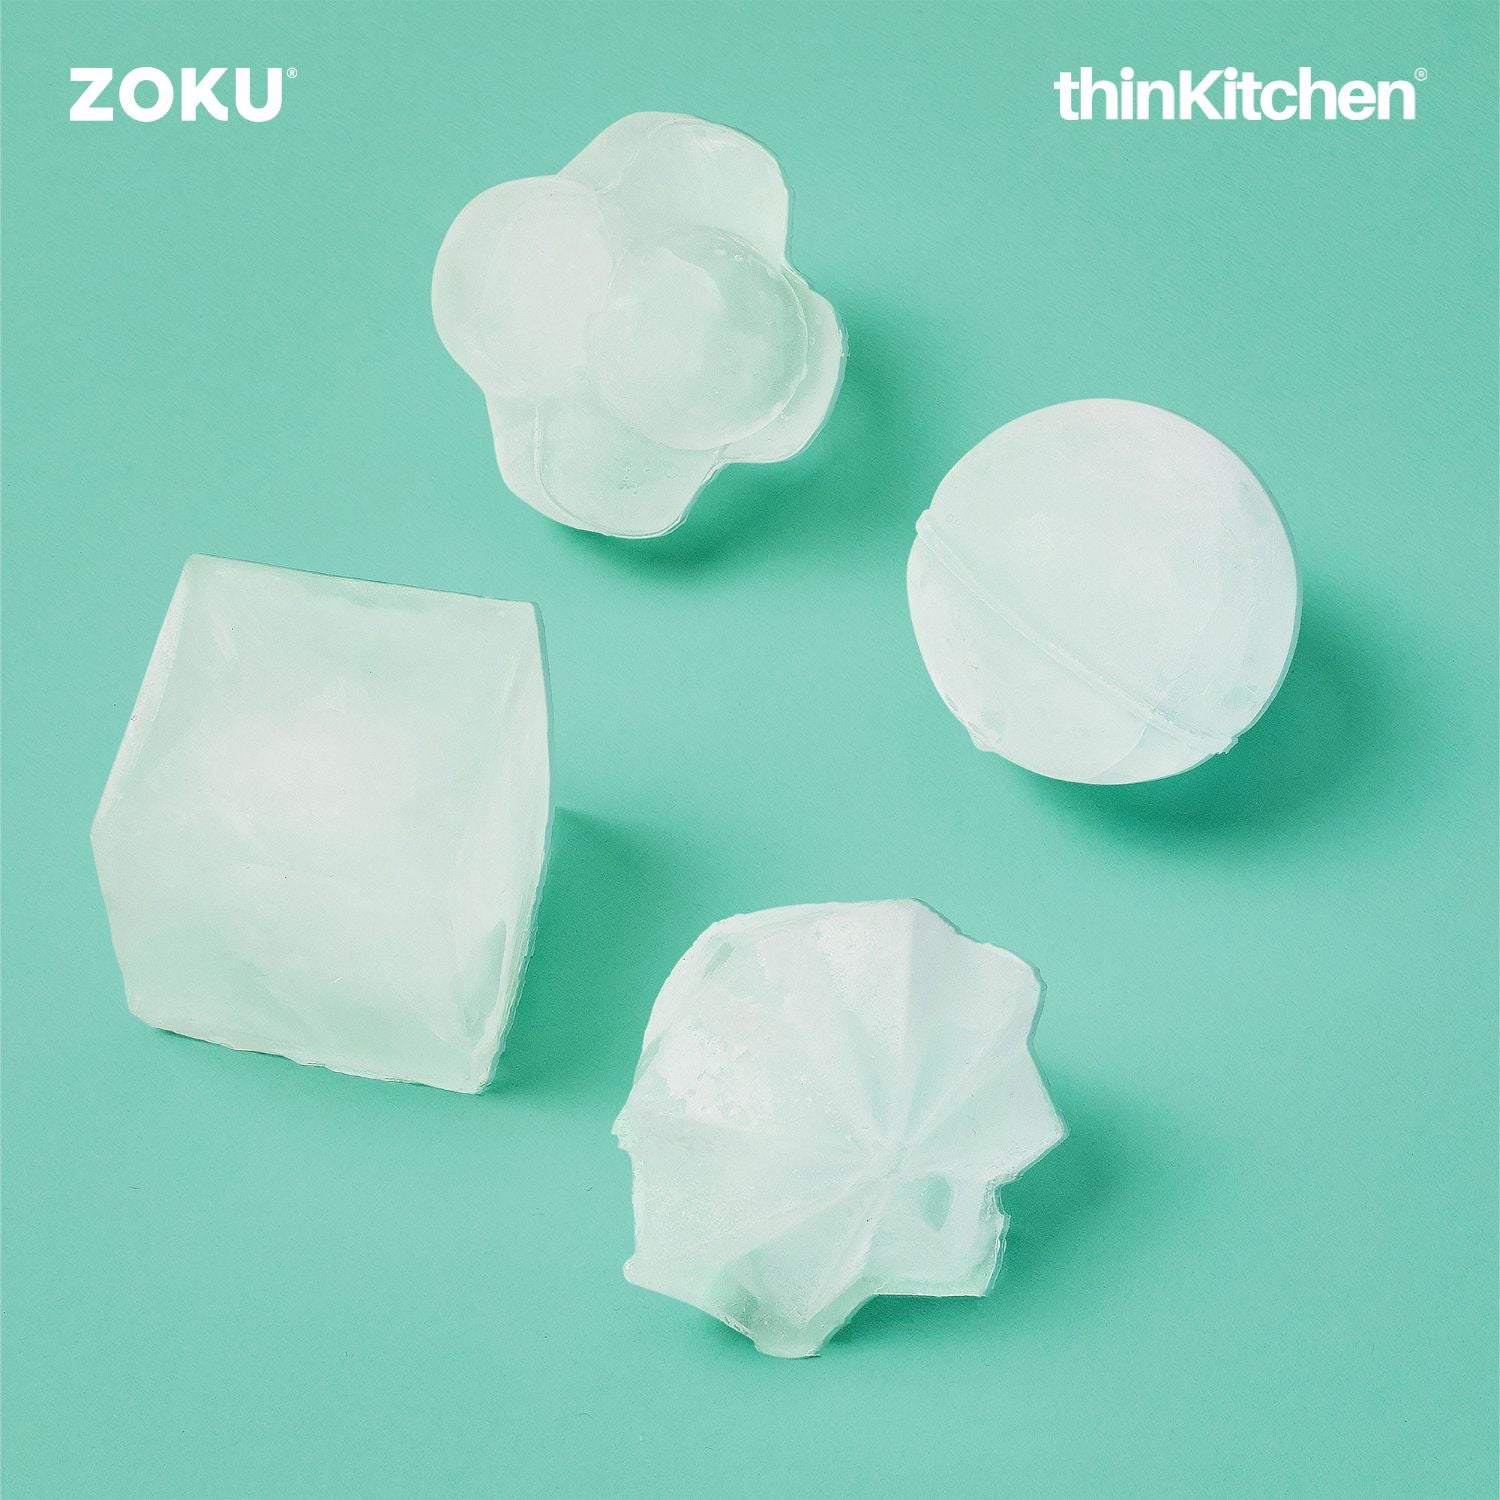 Zoku Mixology Ice Molds - Set of 3